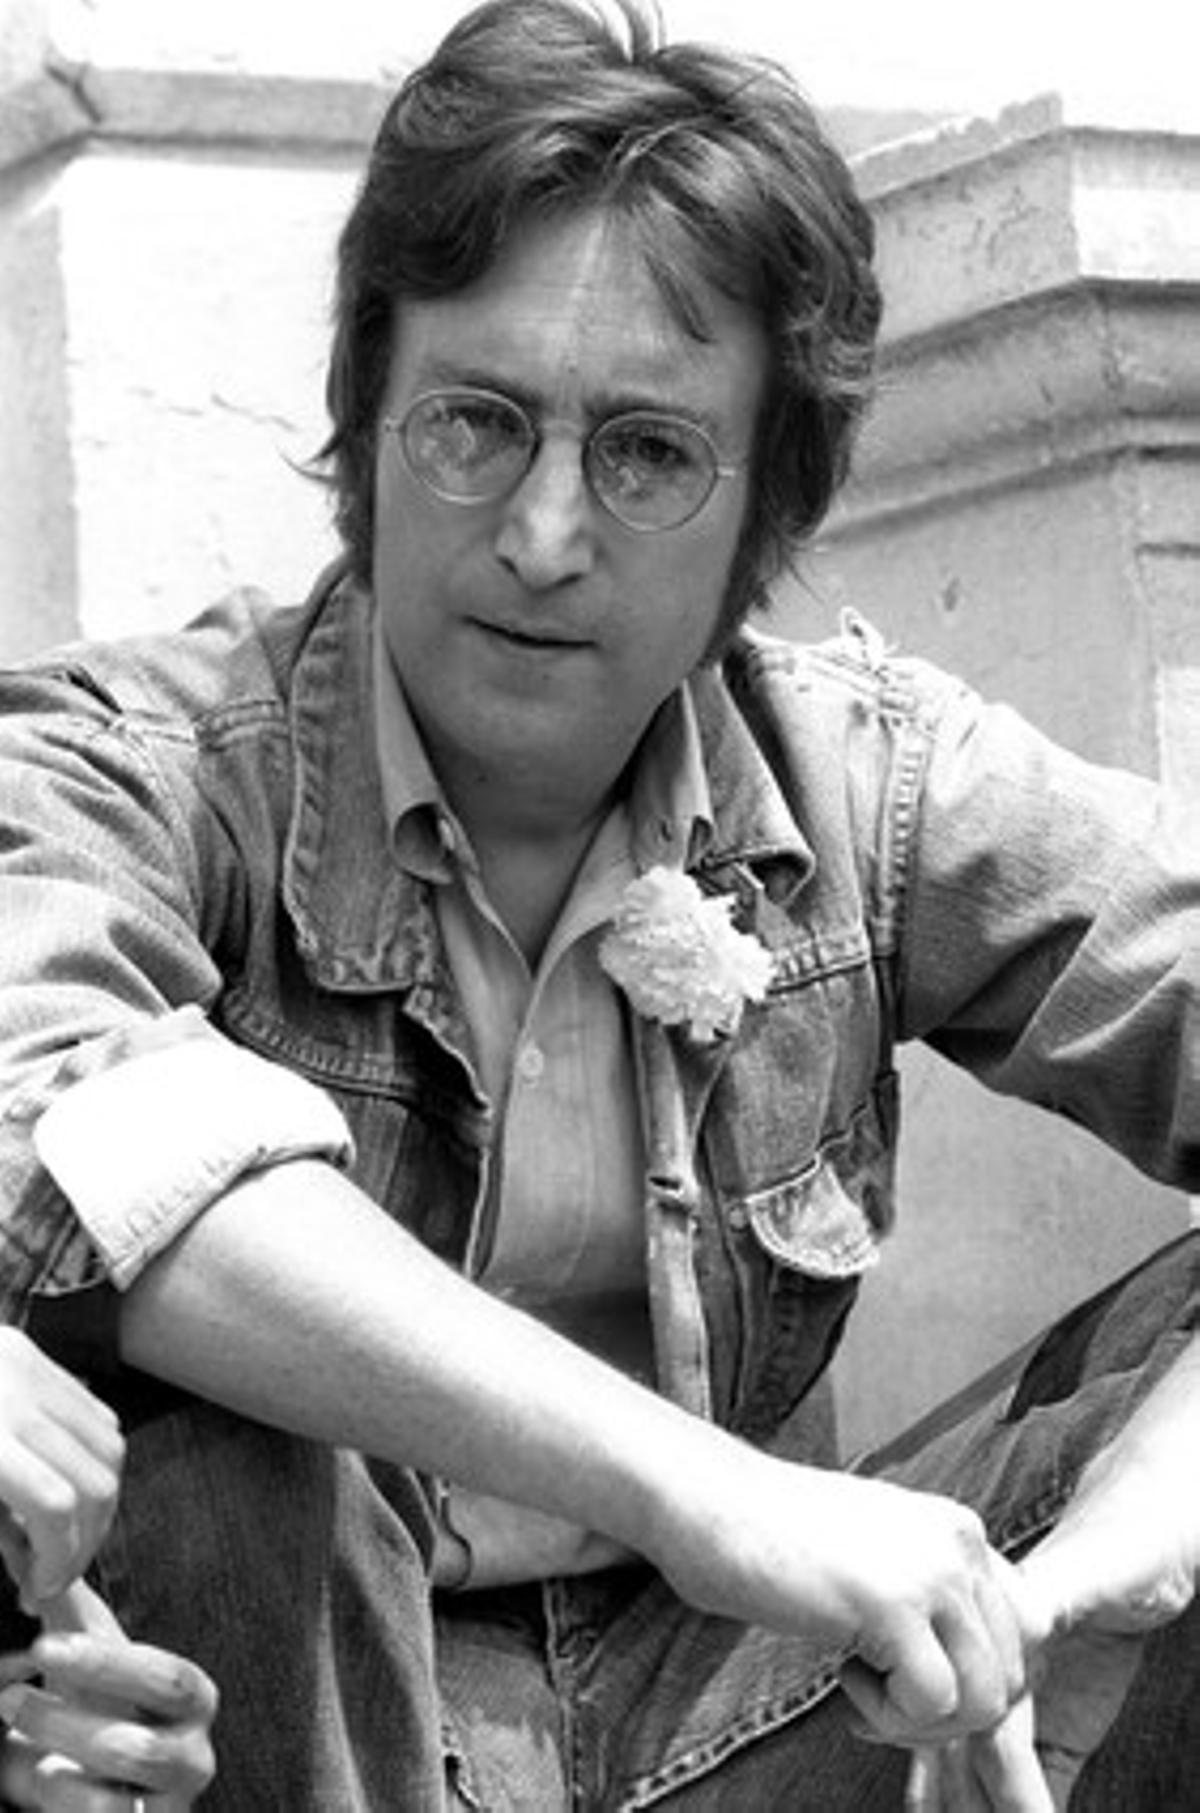 John Lennon, en una imatge del 1971.